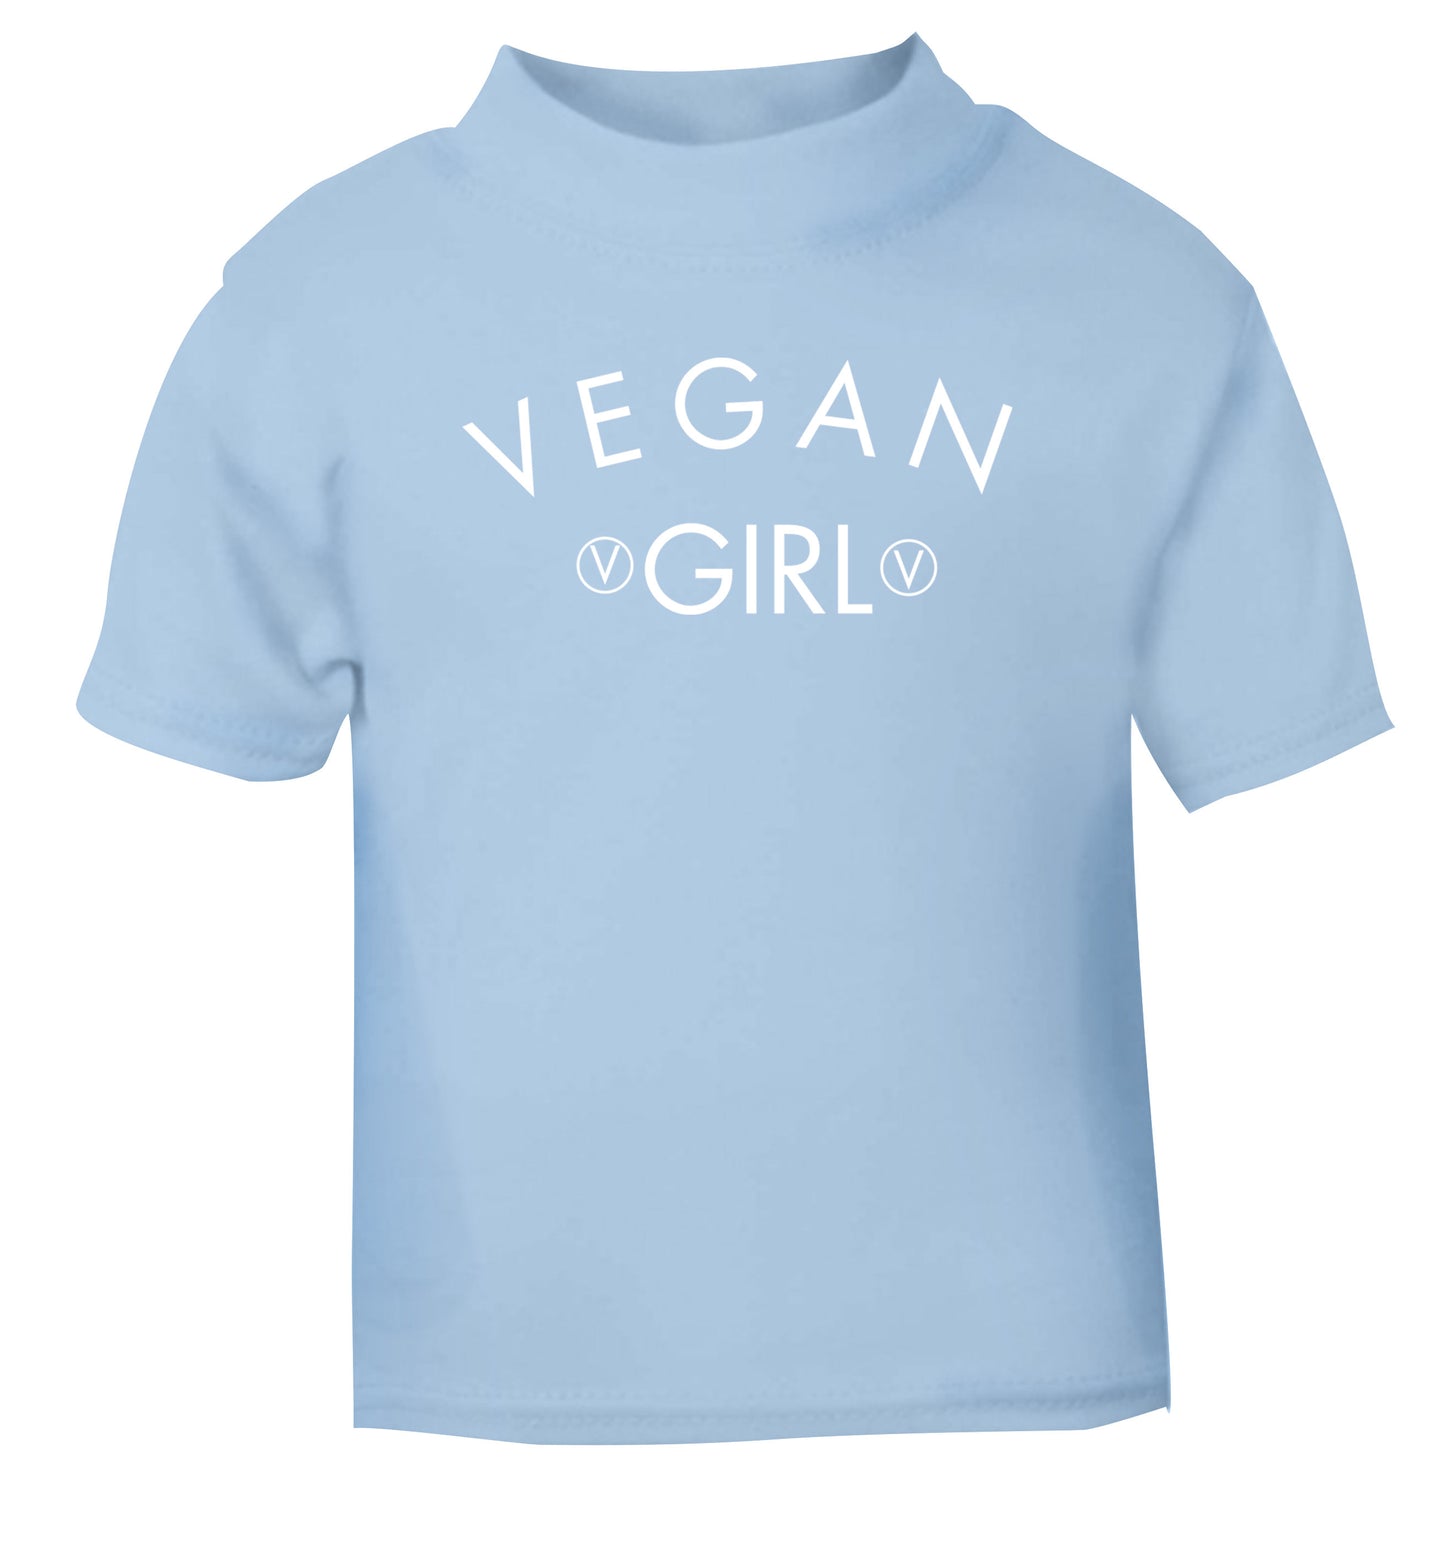 Vegan girl light blue Baby Toddler Tshirt 2 Years